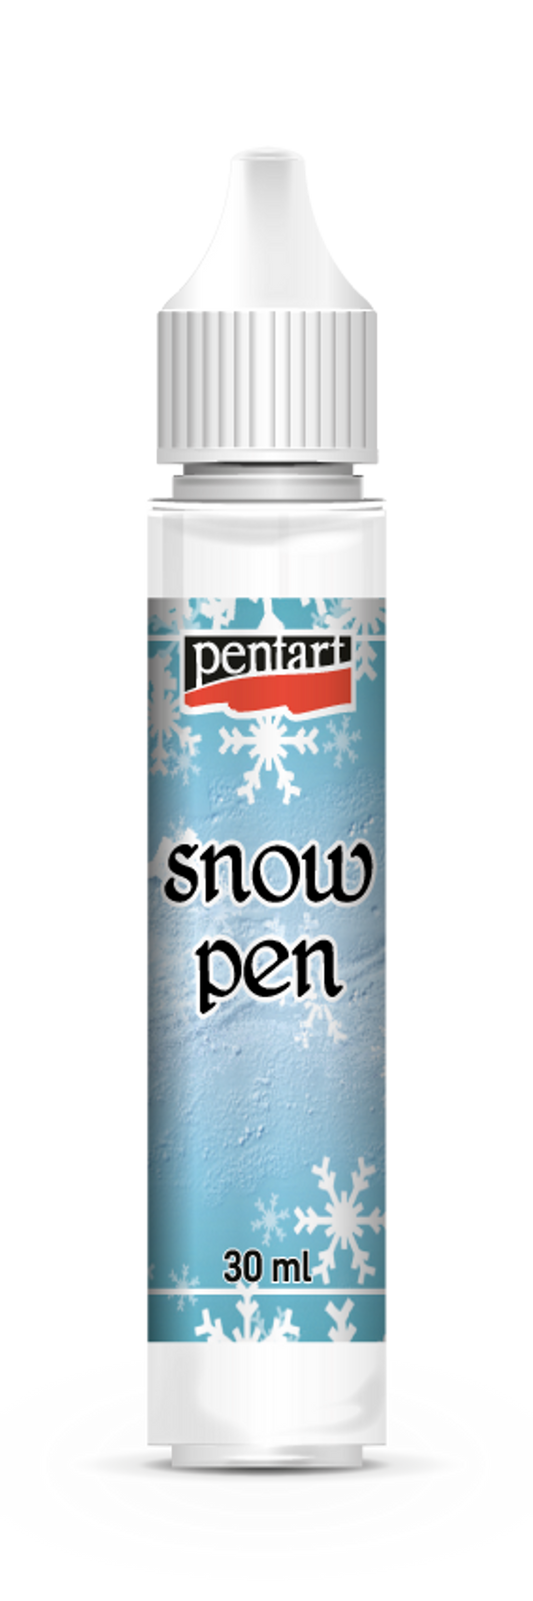 Pentart Snow Pen - Decoupage Queen